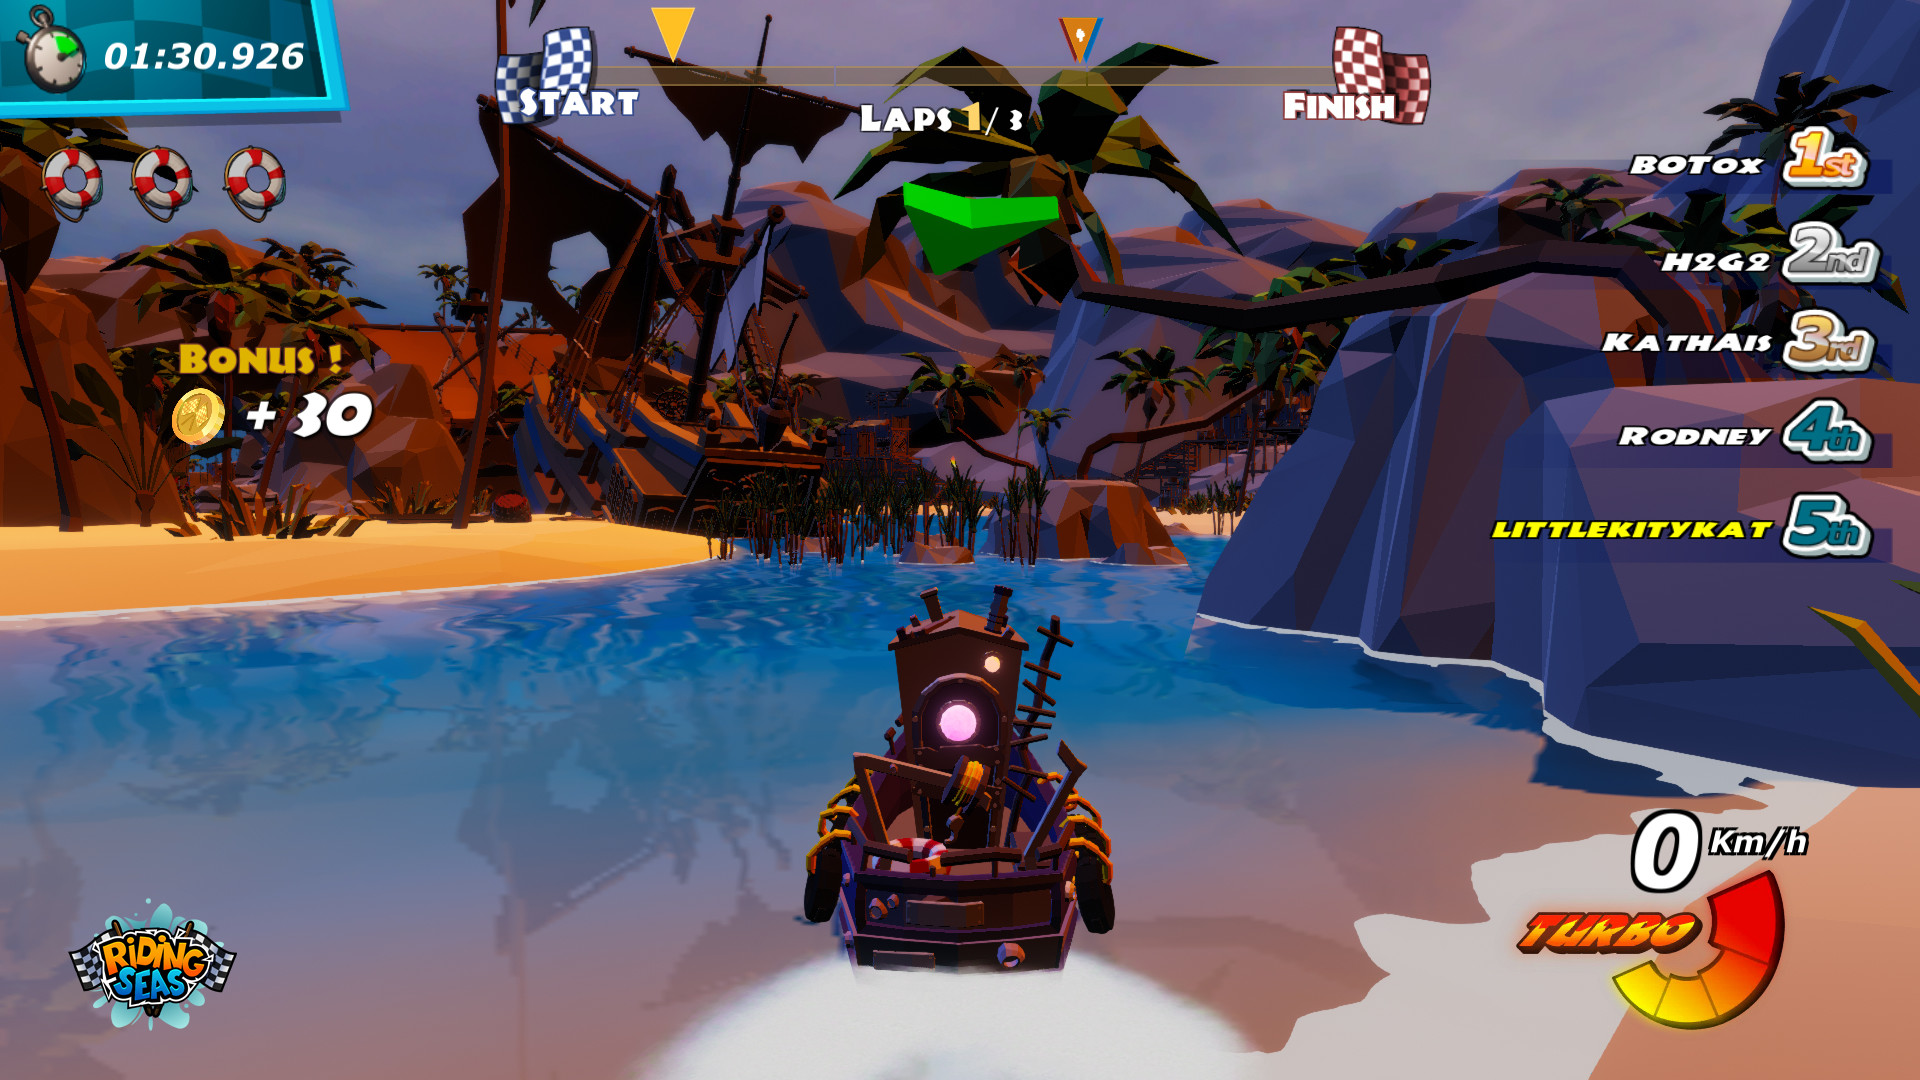 Riding Seas screenshot